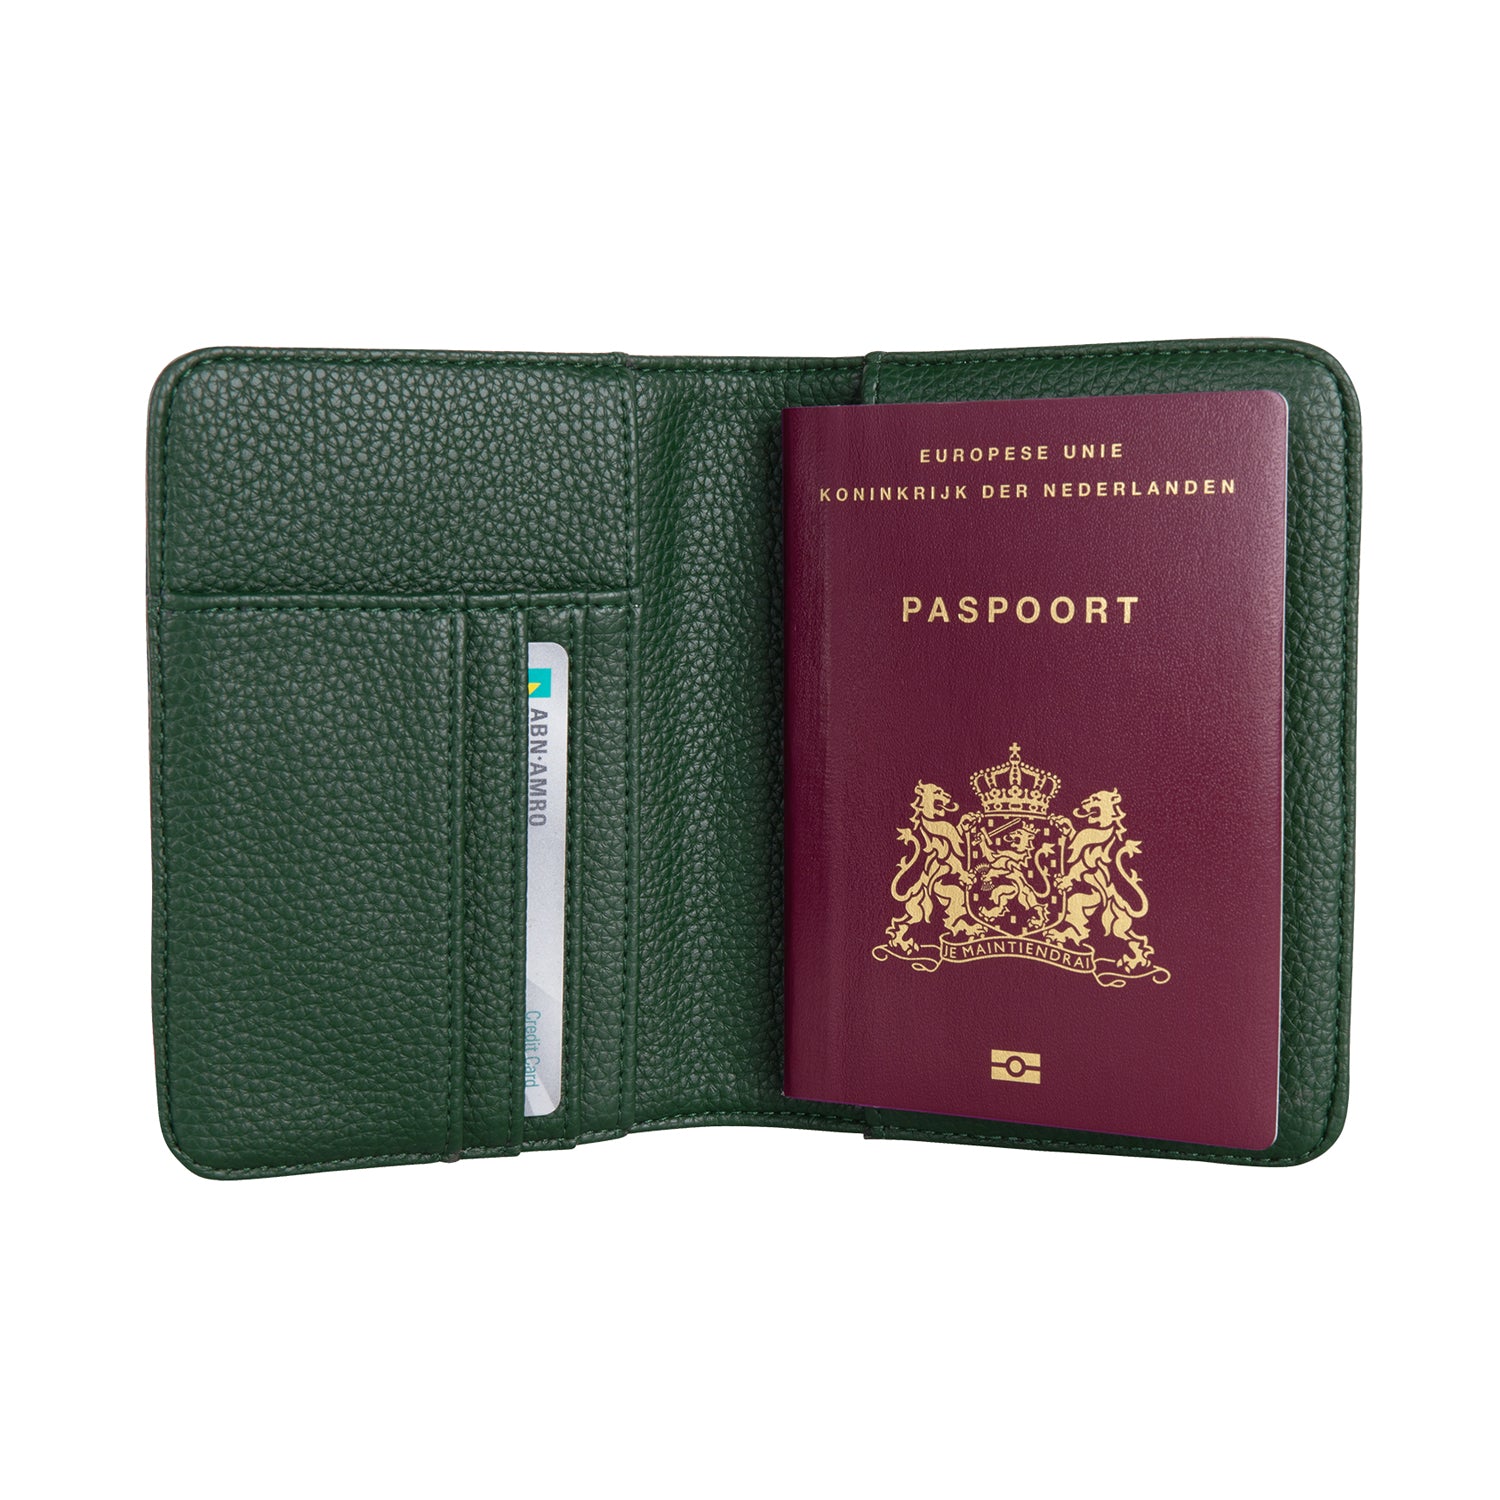 Fab Seventies Classic - Beetle Green - Passport Holder